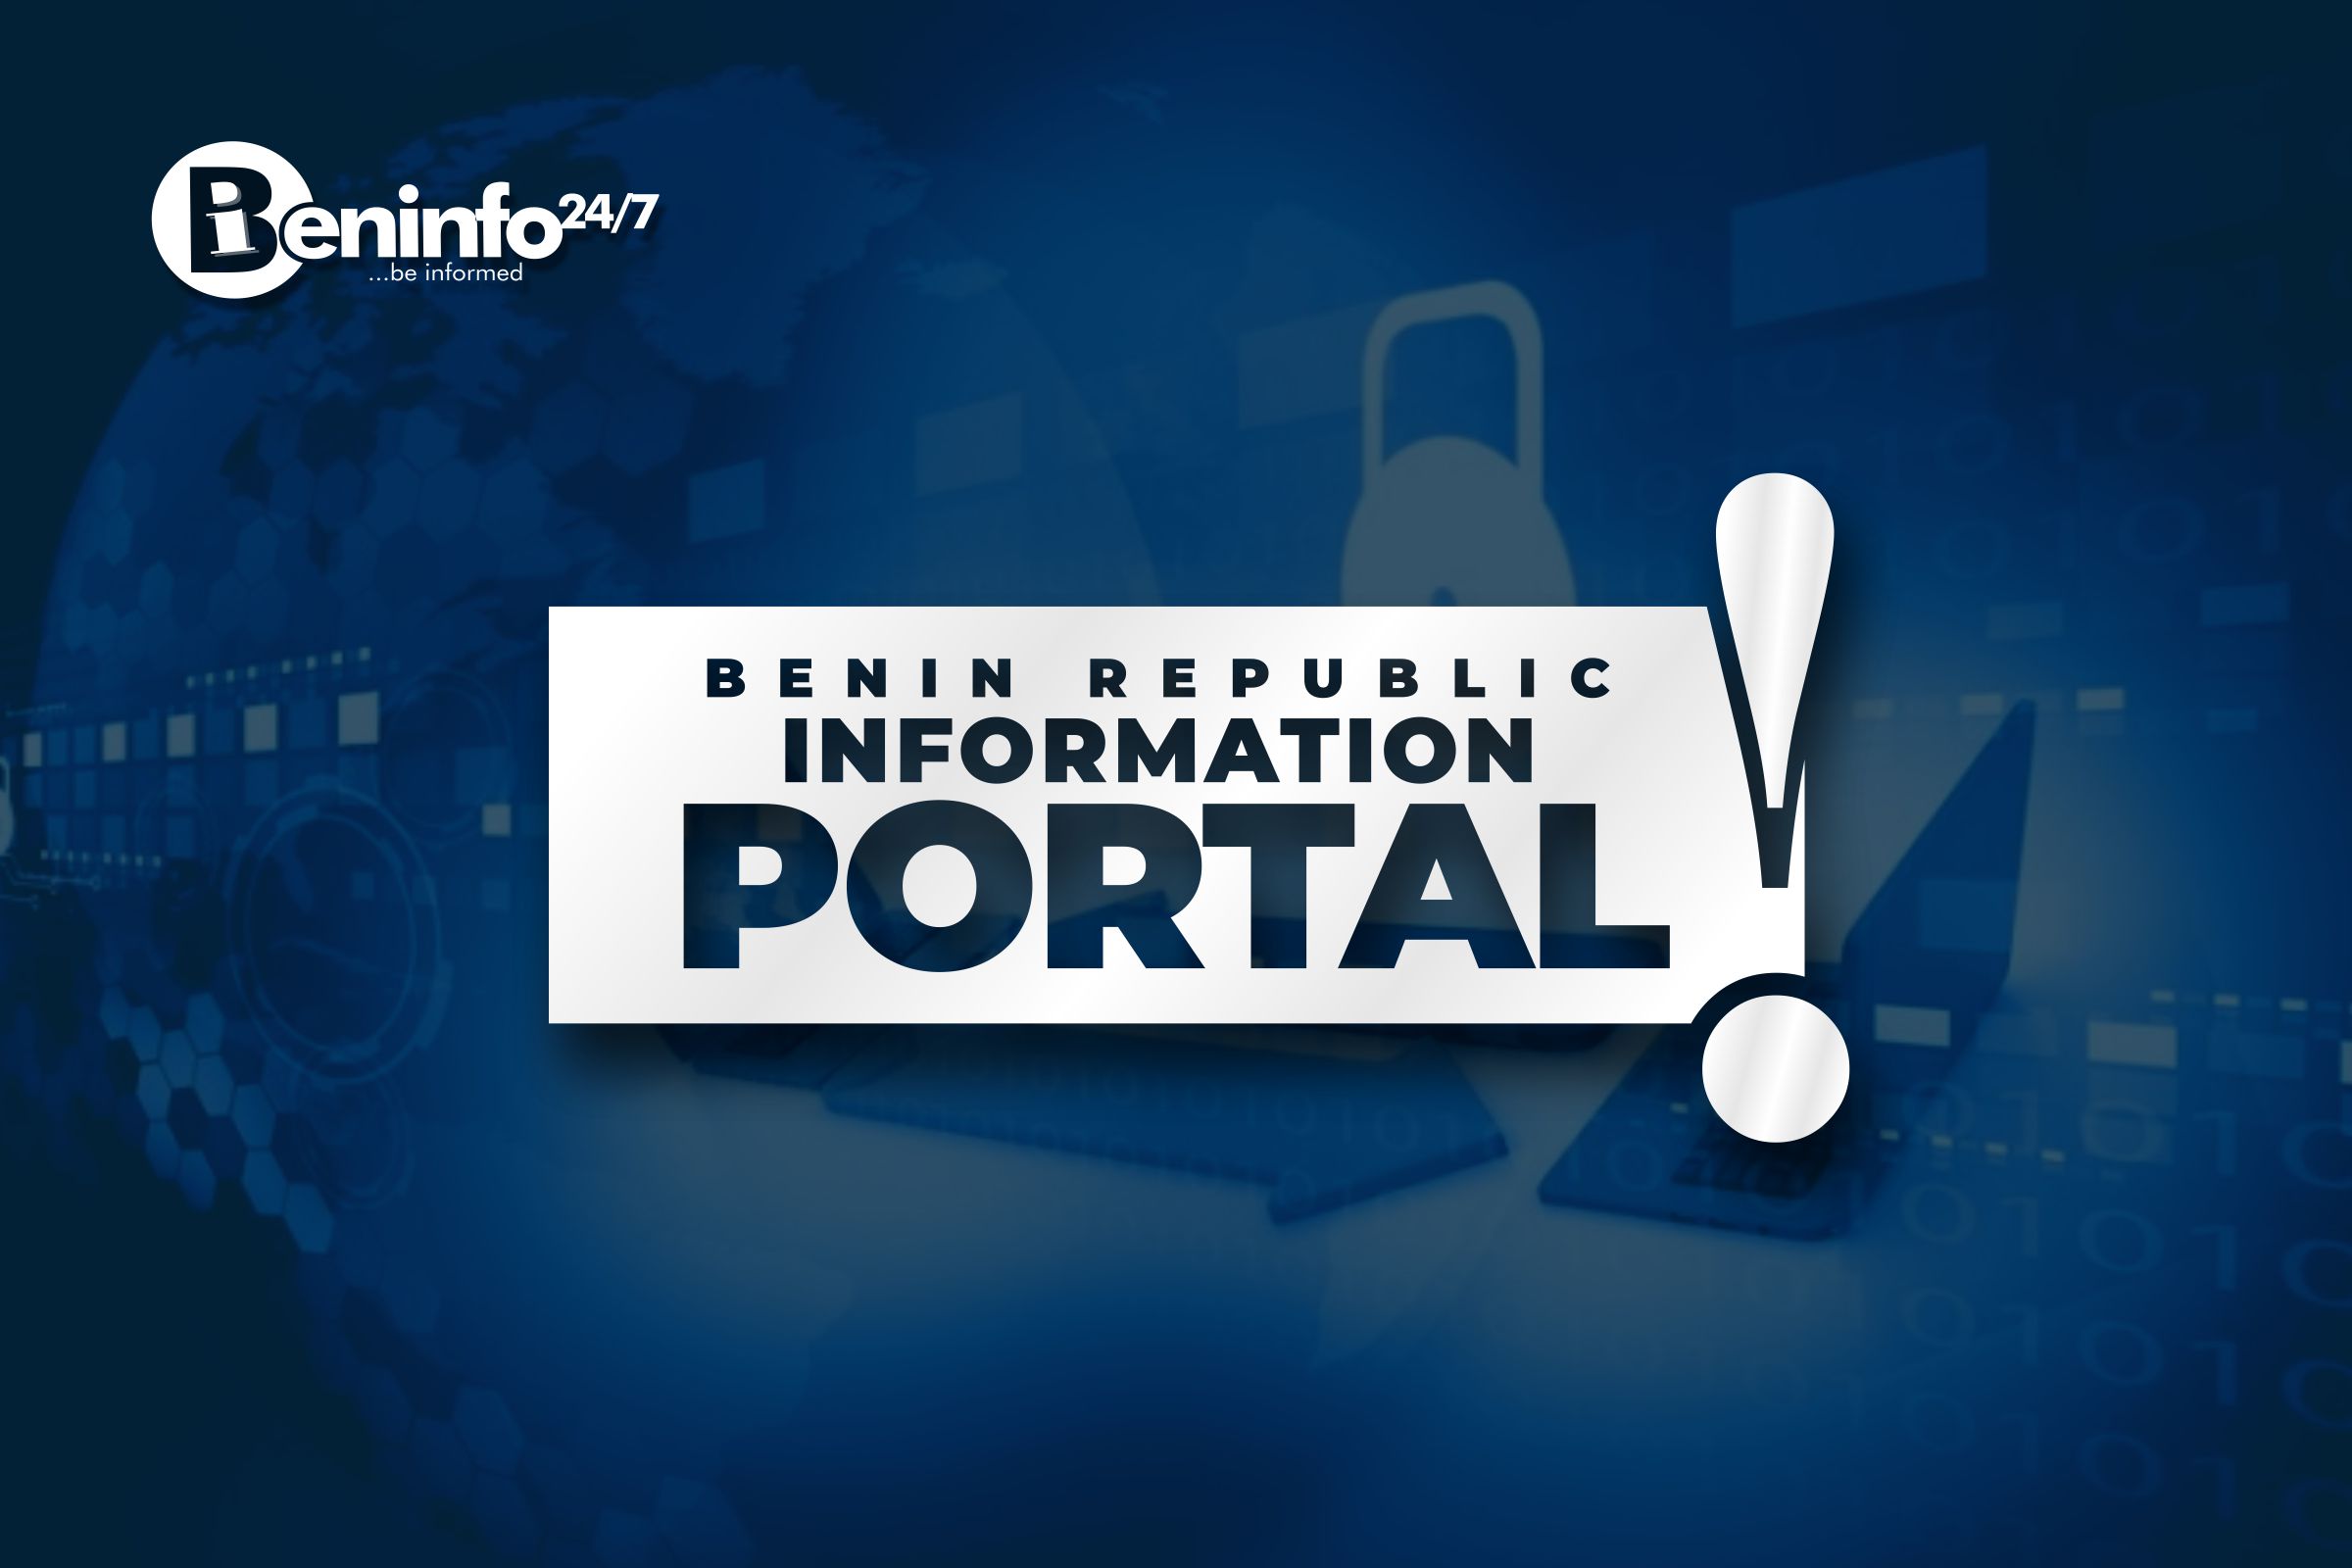 Benin Republic information portal